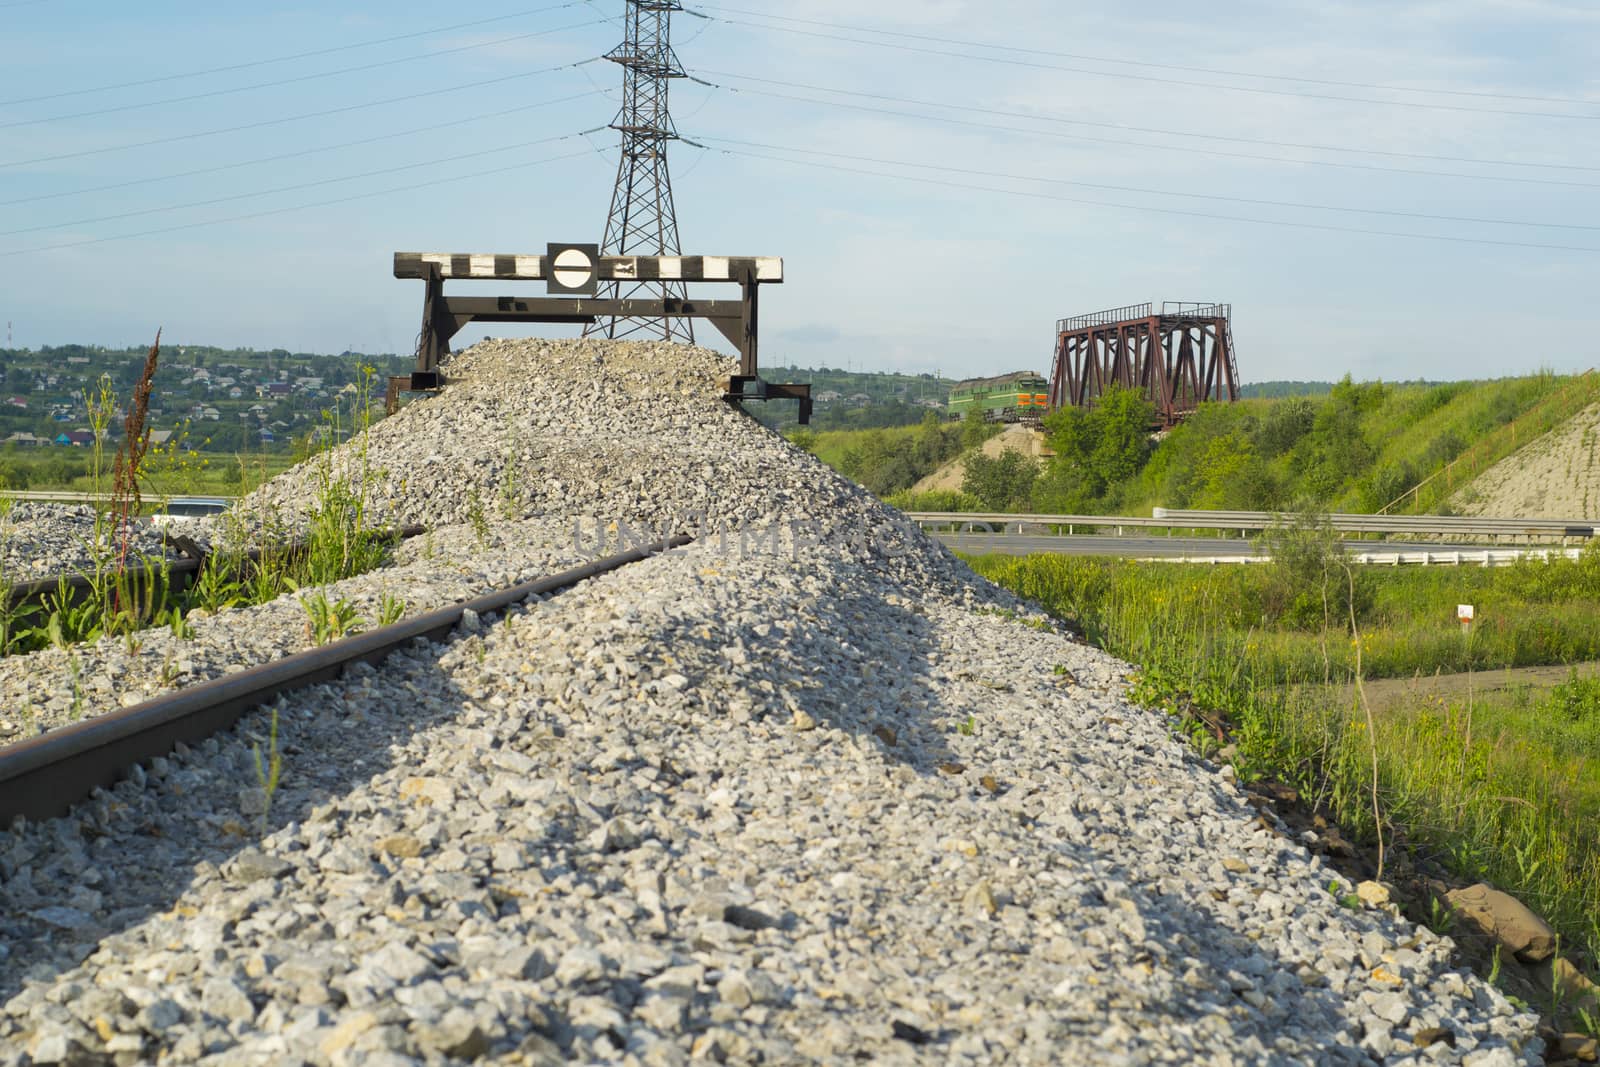 Railway impasse on the railroad tracks by jk3030